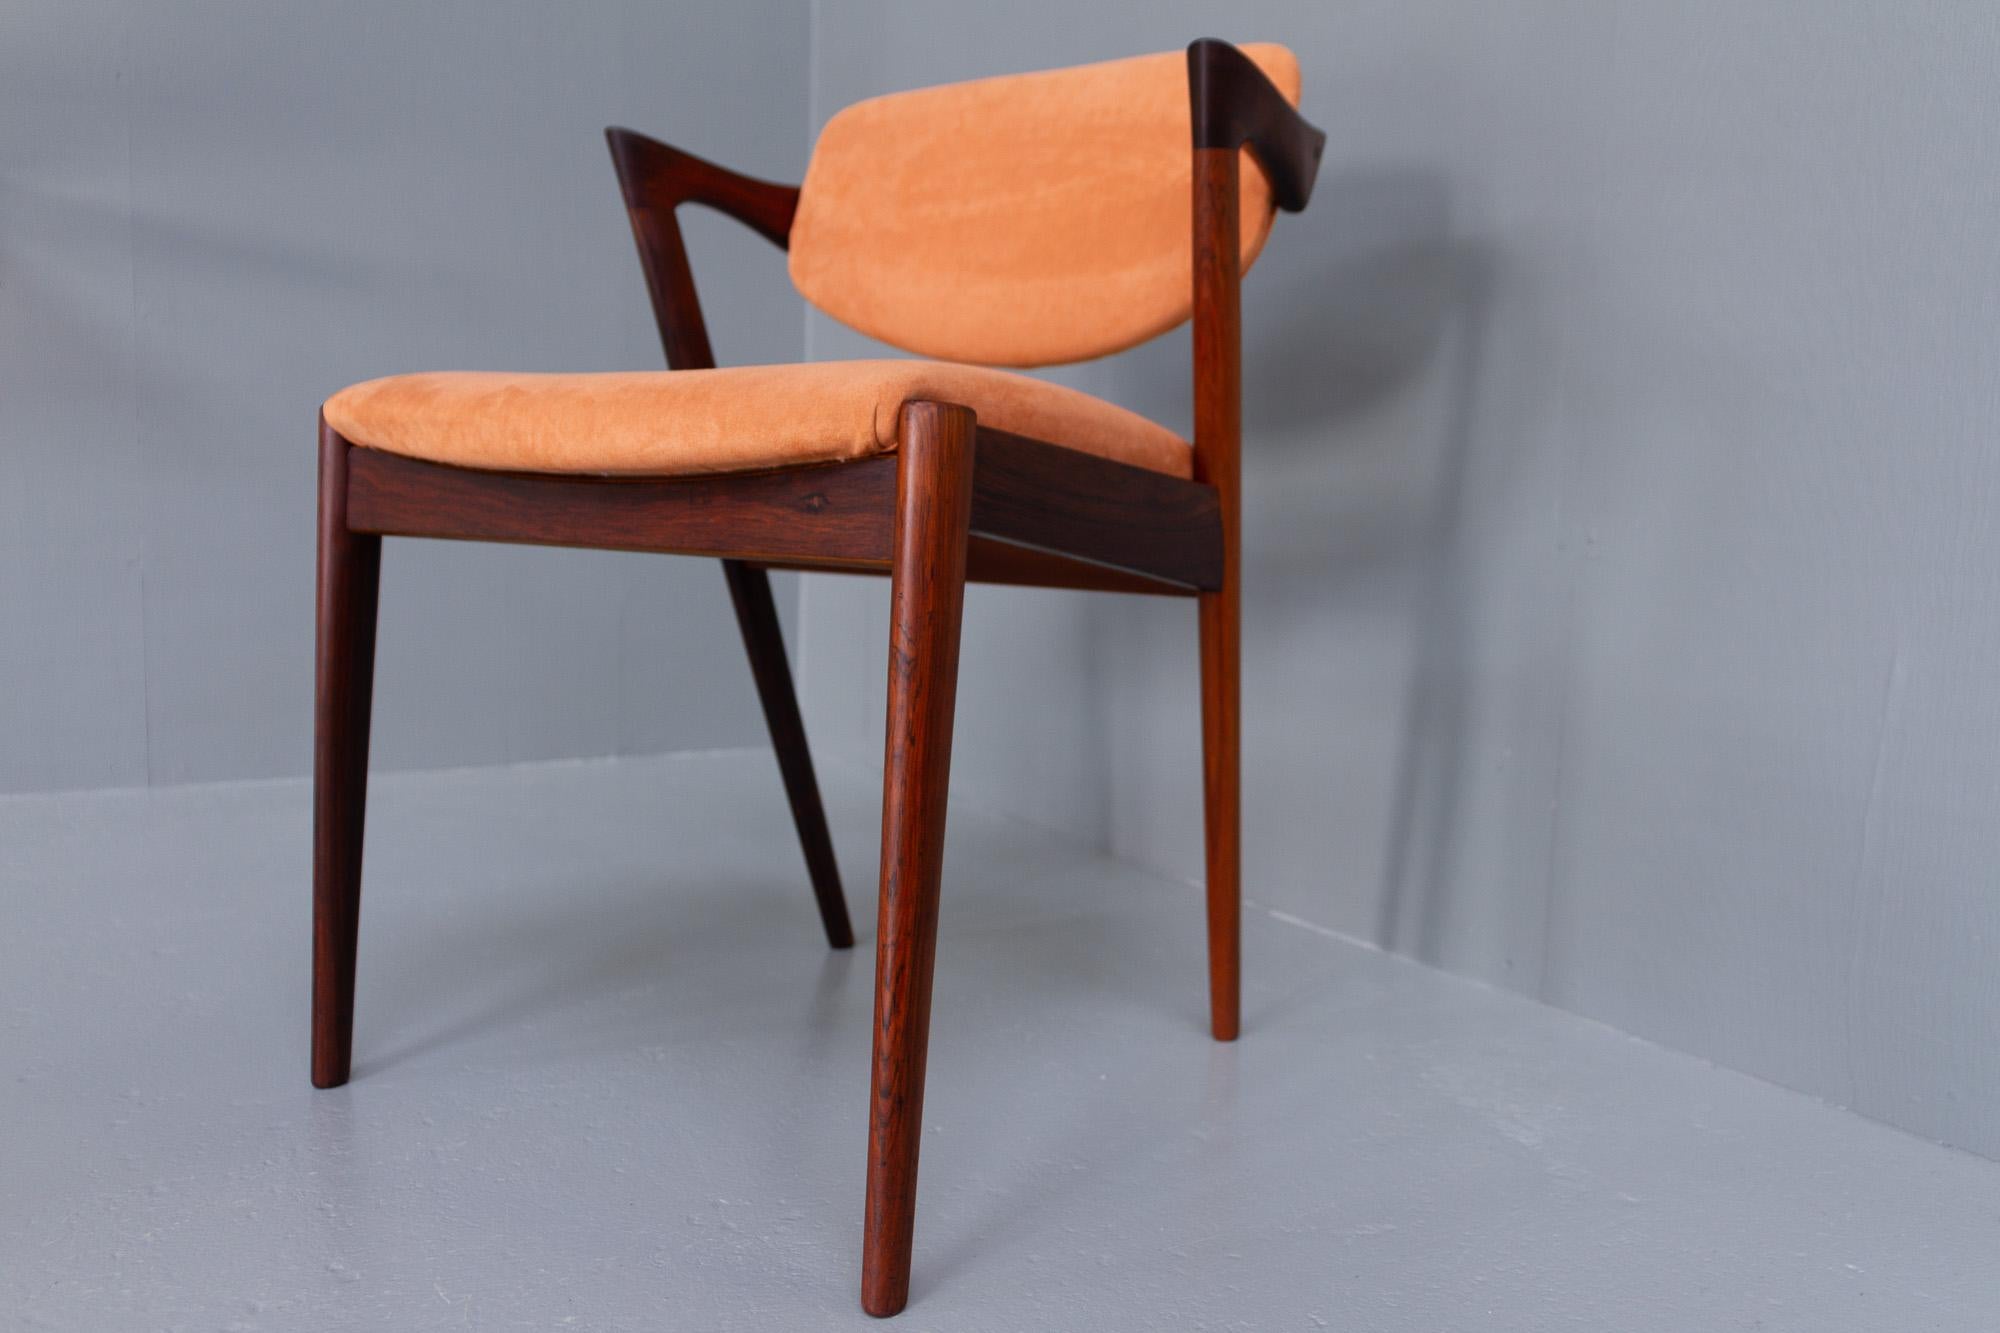 Vintage Danish Modern Rosewood Chair Model 42 by Kai Kristiansen, 1960s For Sale 6